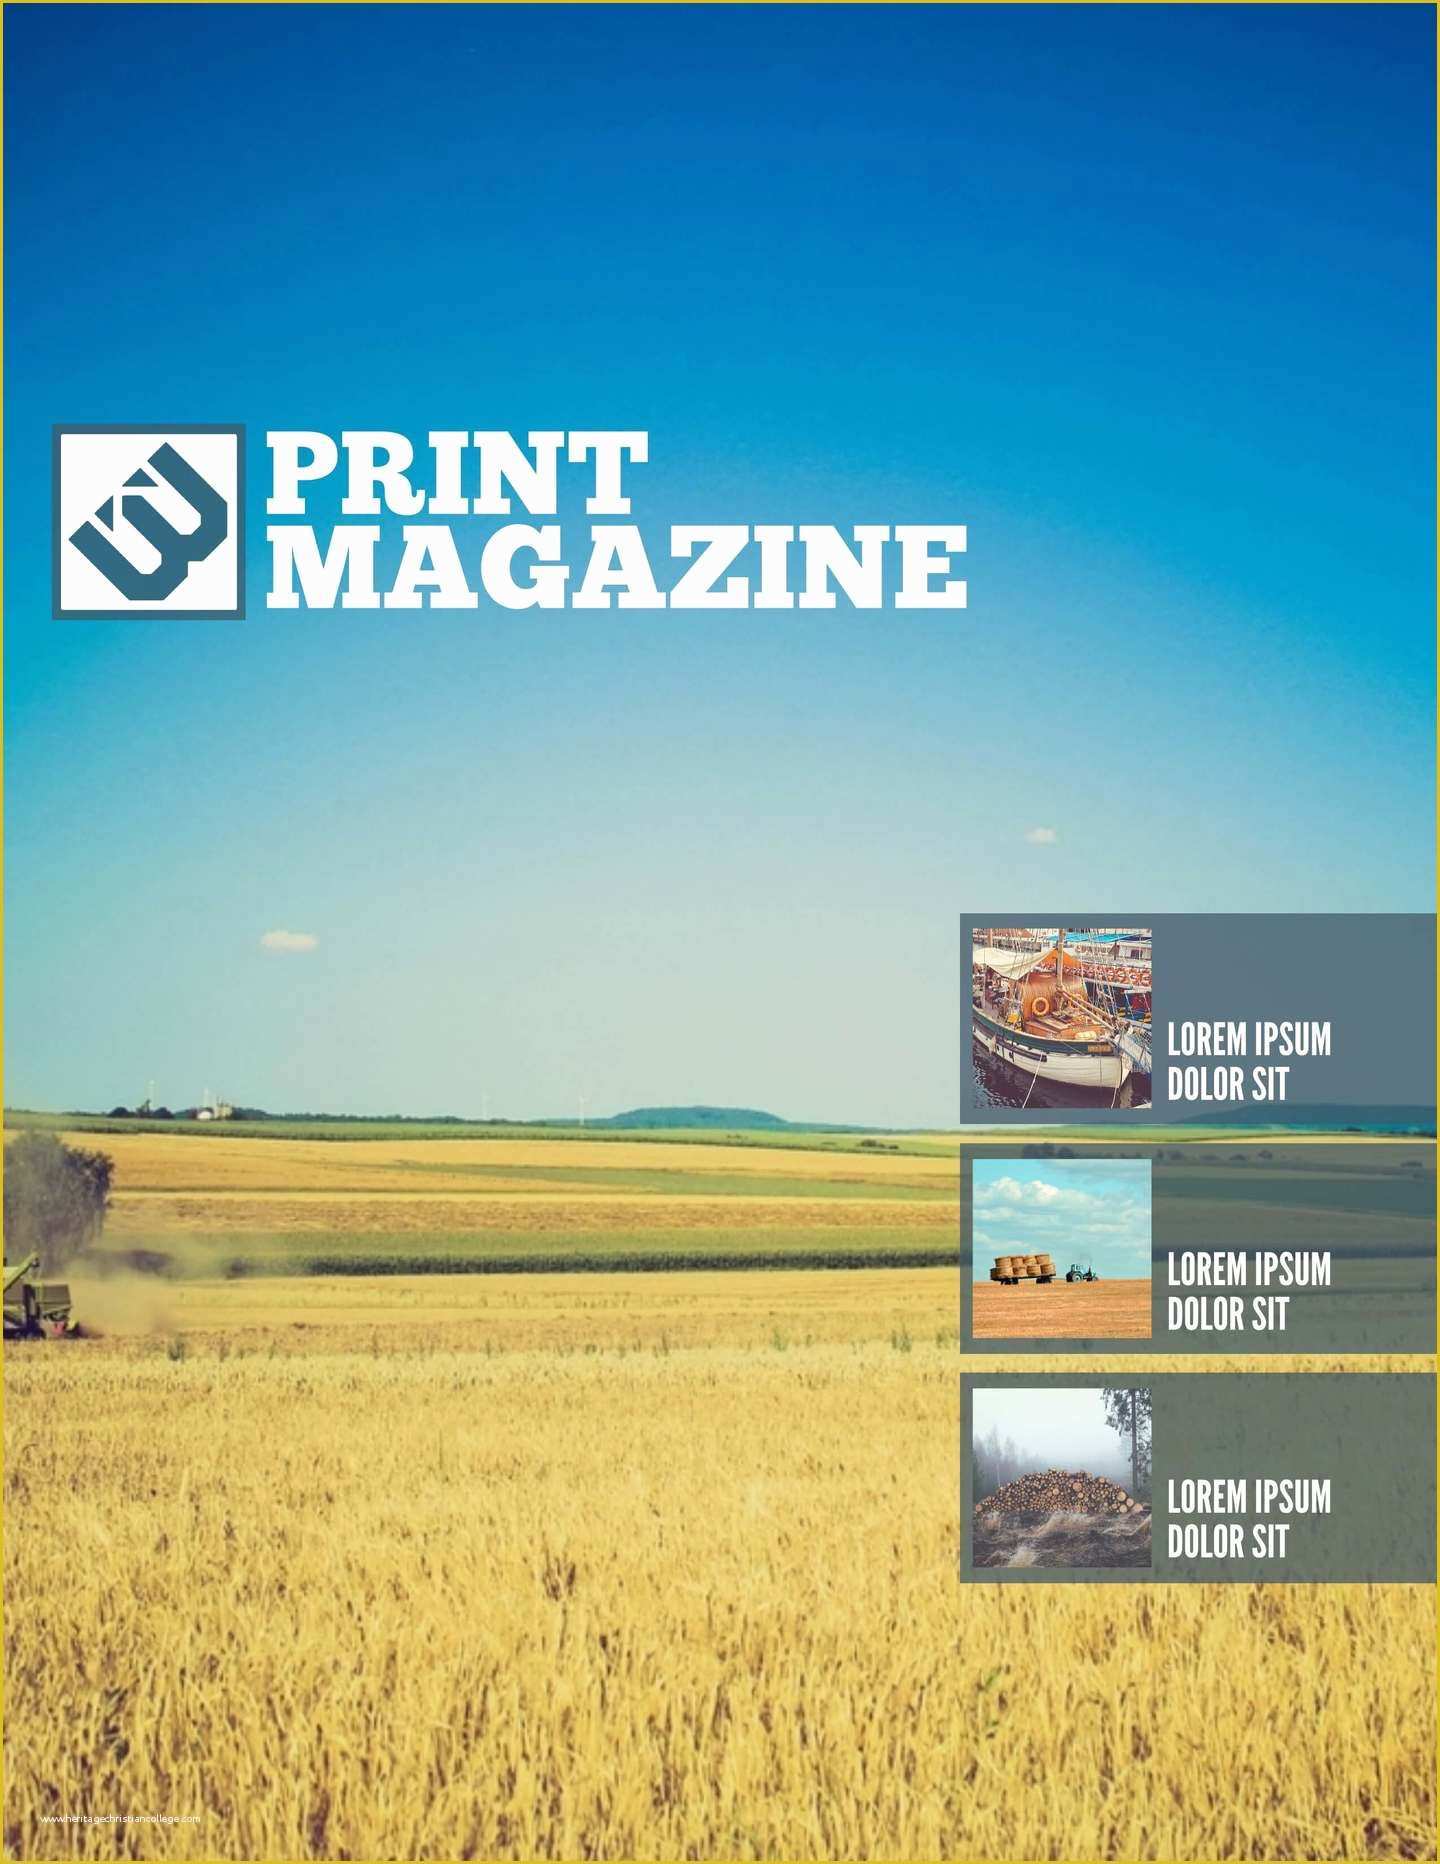 Free Online Magazine Template Of Free Magazine Templates Magazine Cover Designs